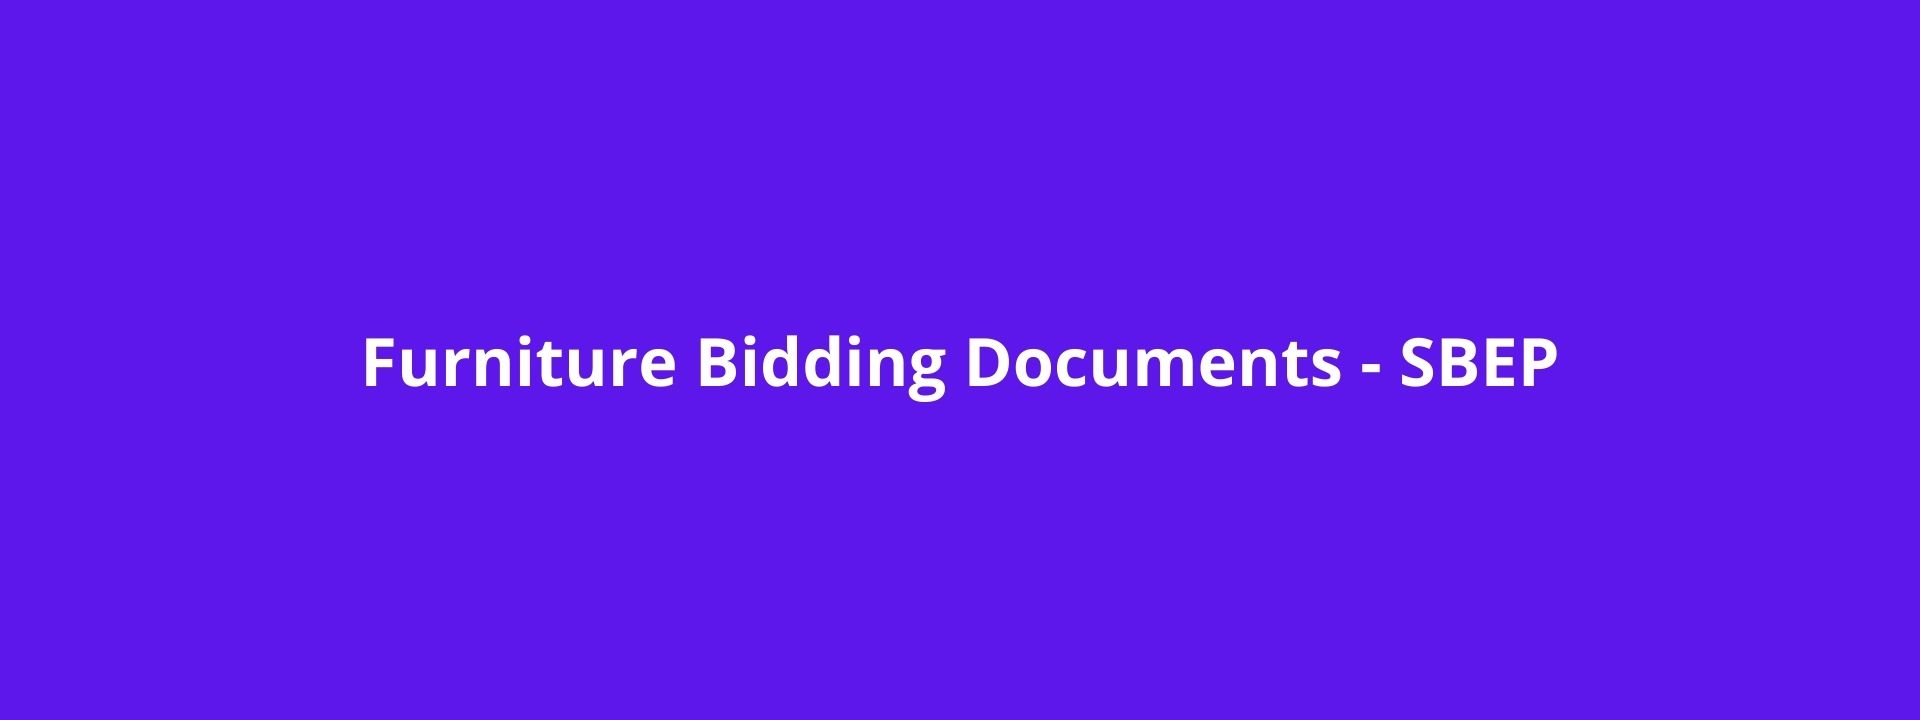 Furniture Bidding Documents